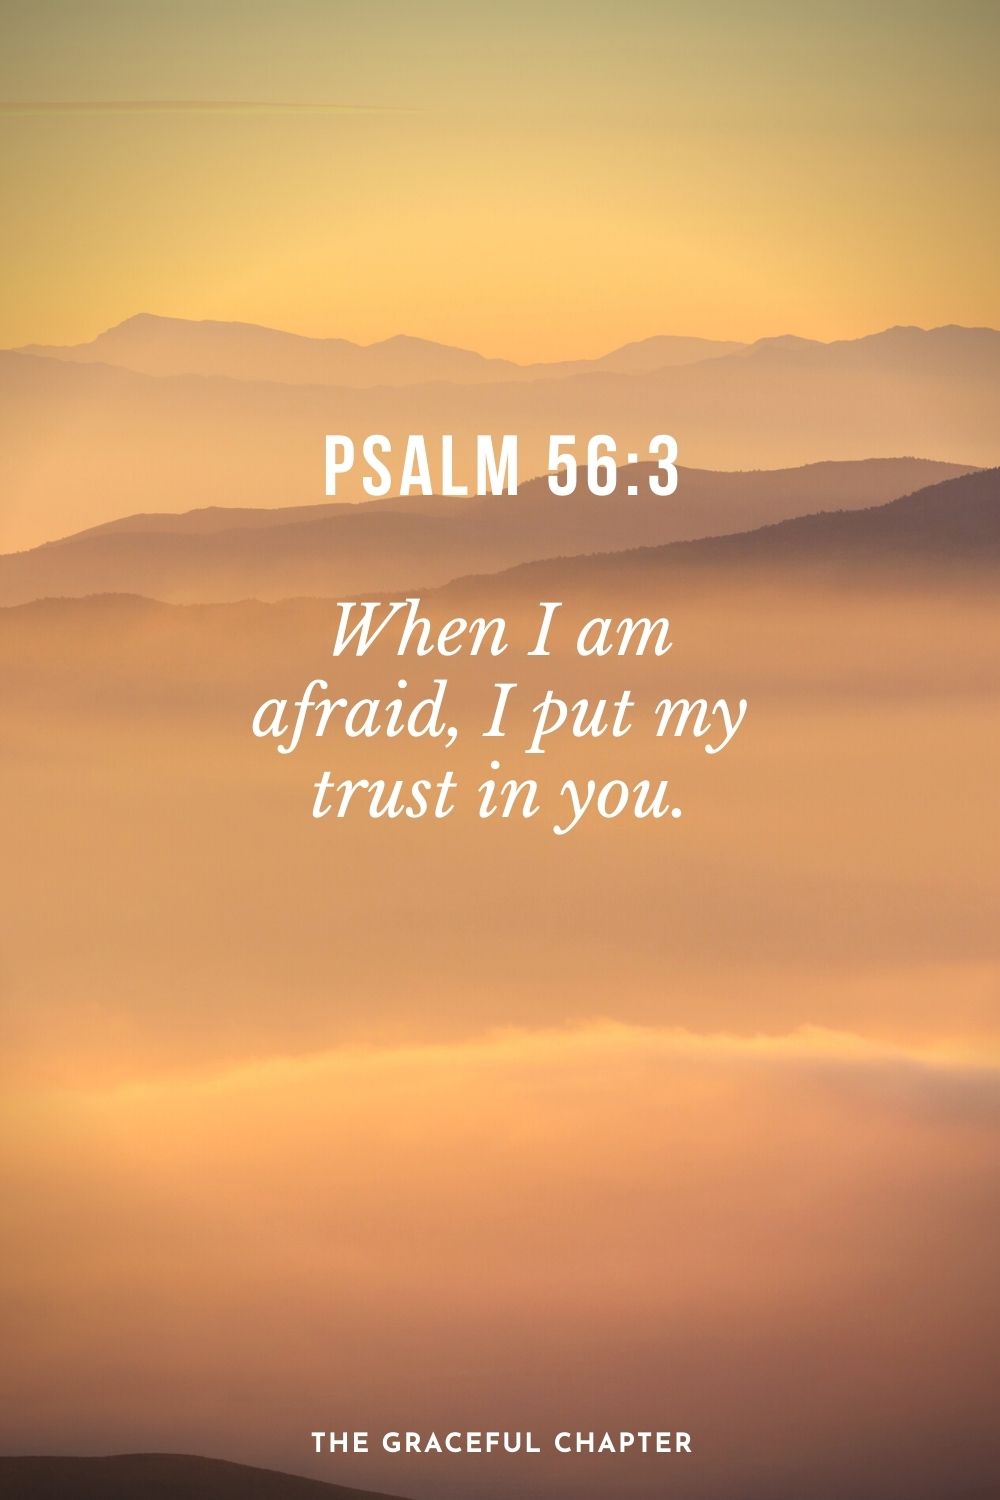 When I am afraid, I put my trust in you. Psalm 56:3